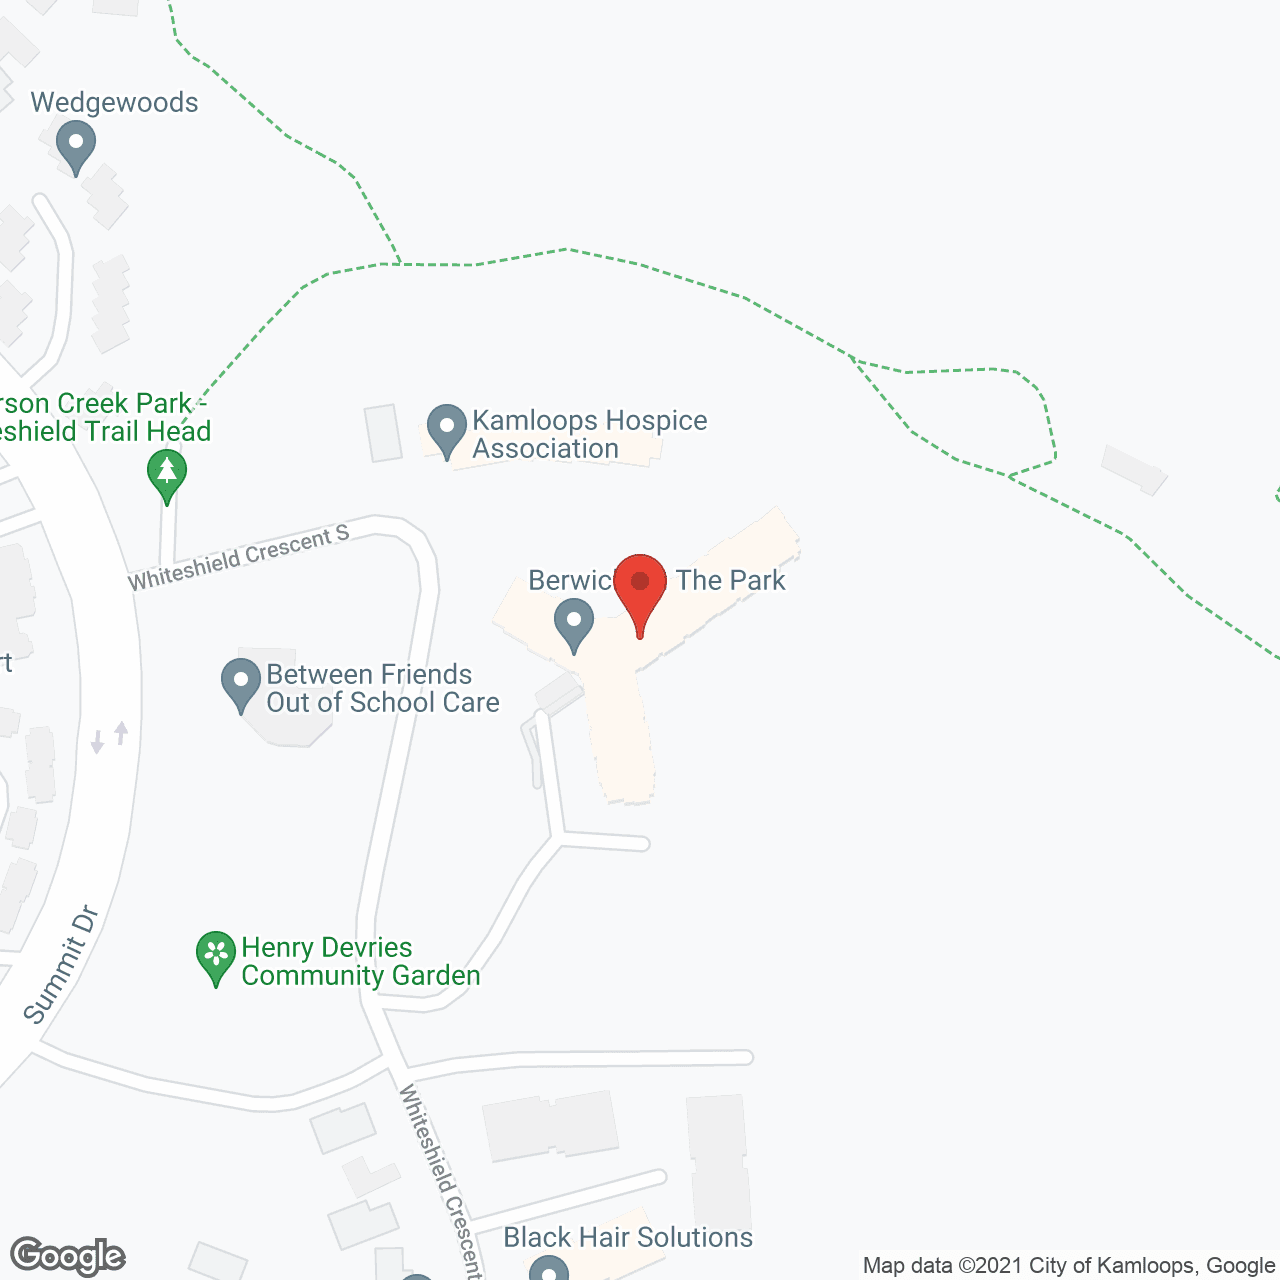 Berwick On The Park in google map